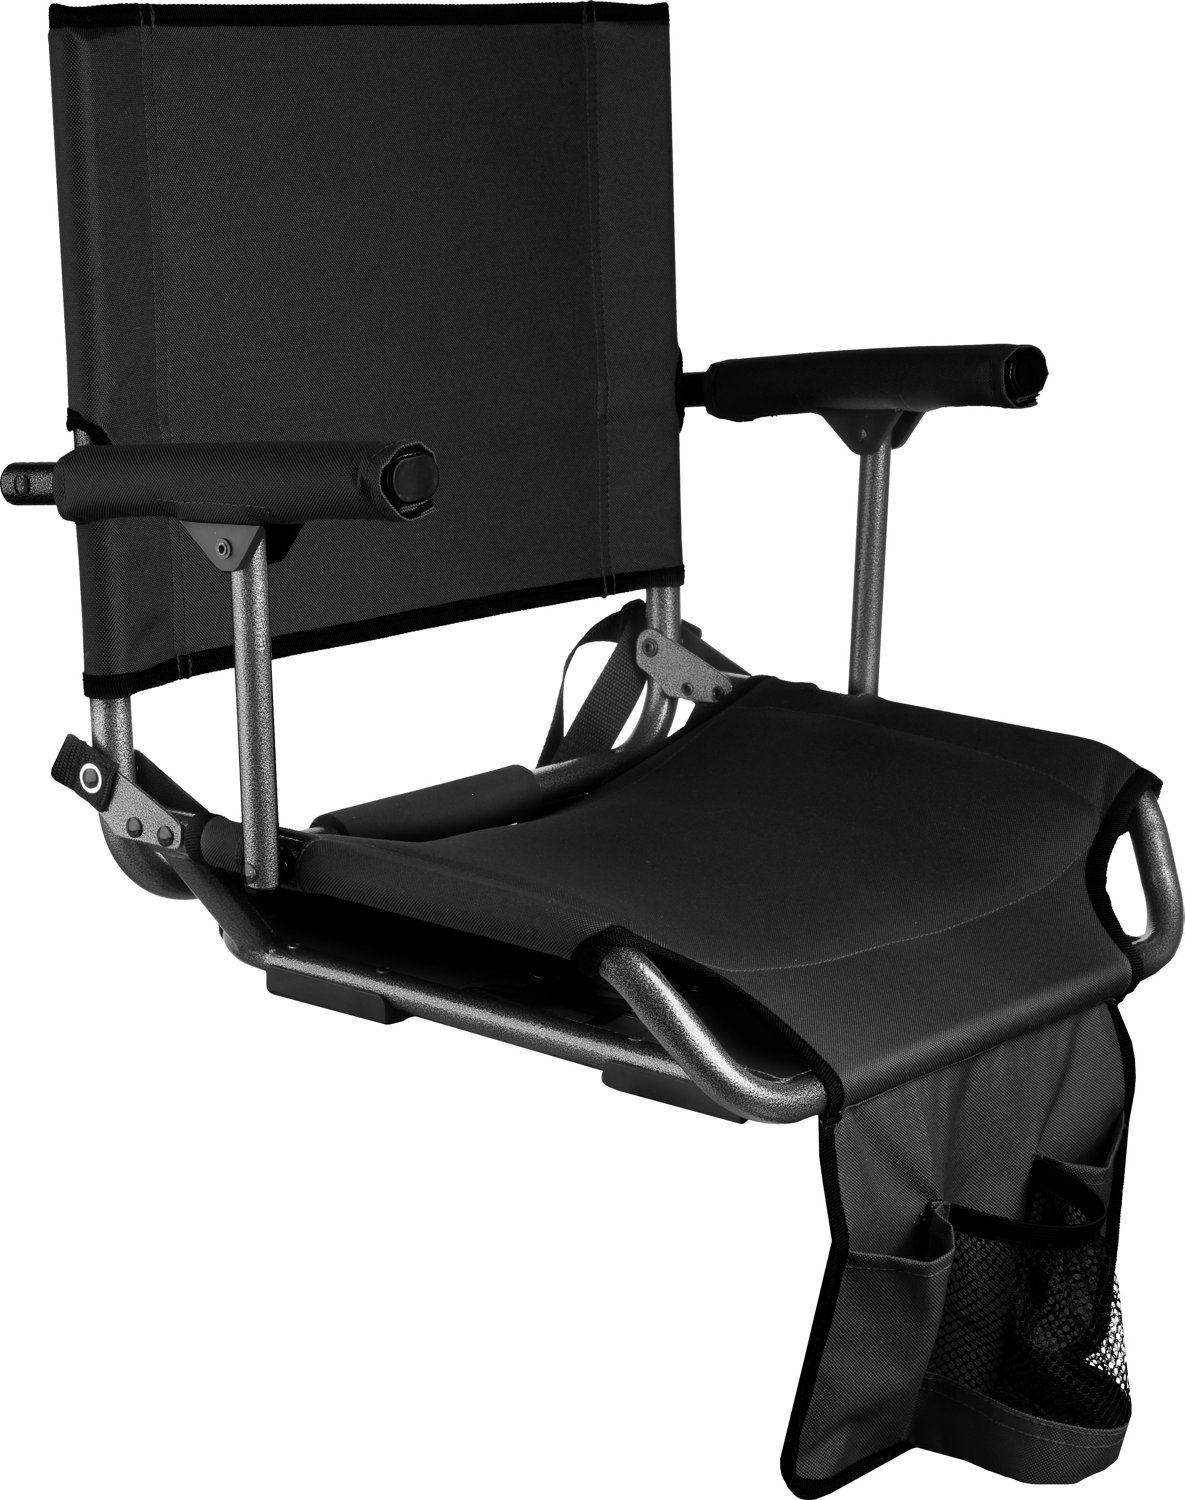 Outdoors Hard Arm Stadium Chair 